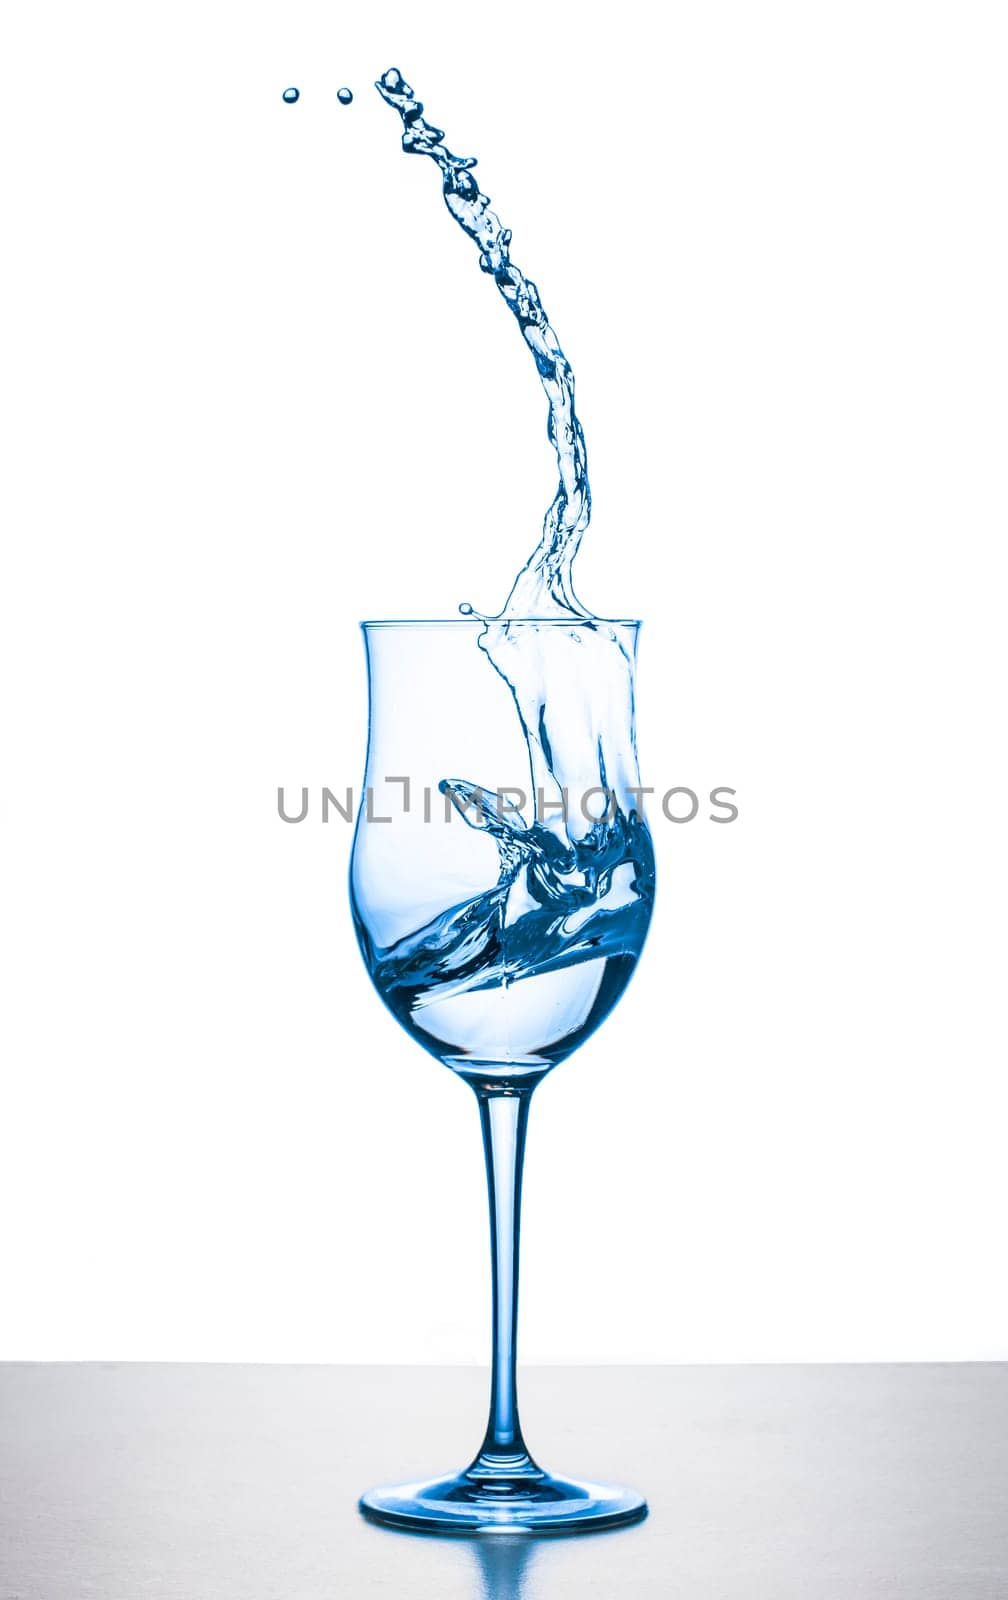 water splashing from wineglass on white background